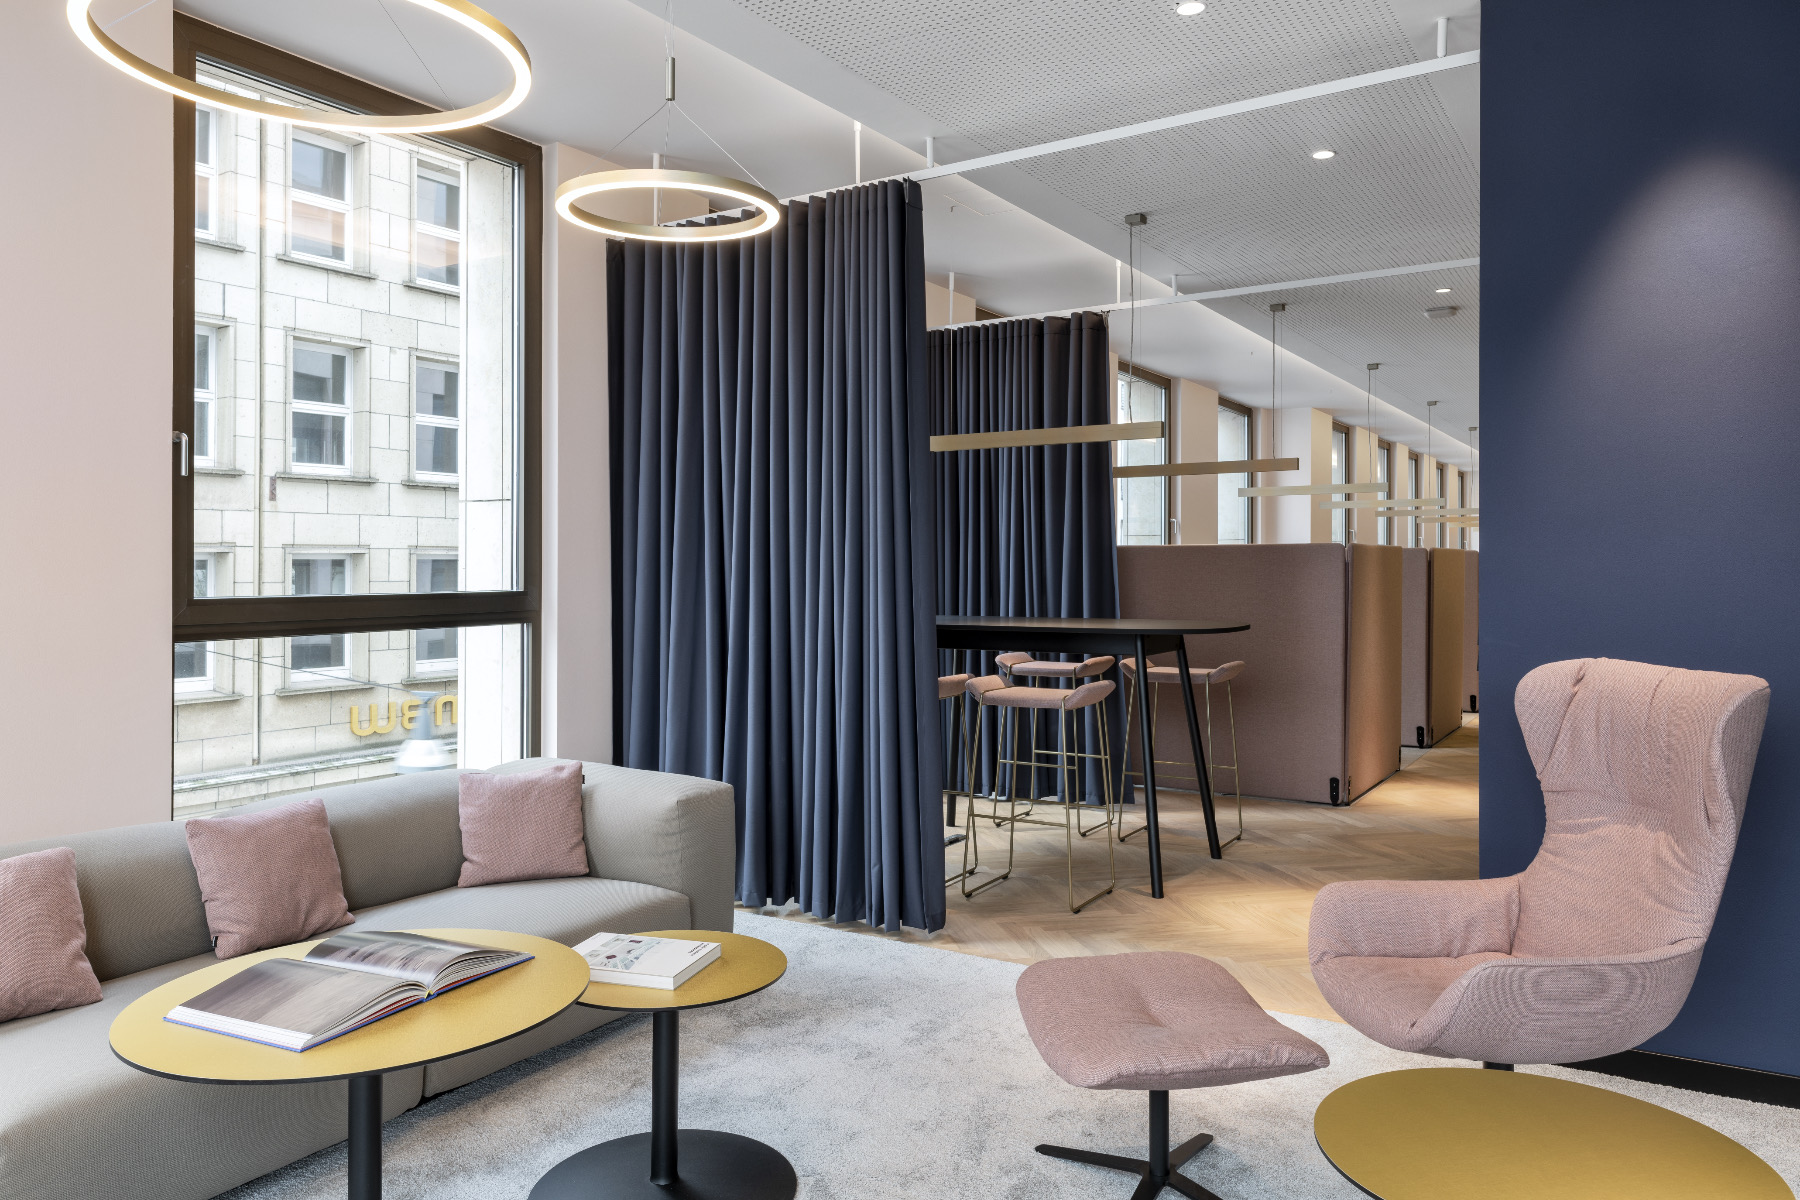 A Look Inside Credion AG’s New Hamburg Office